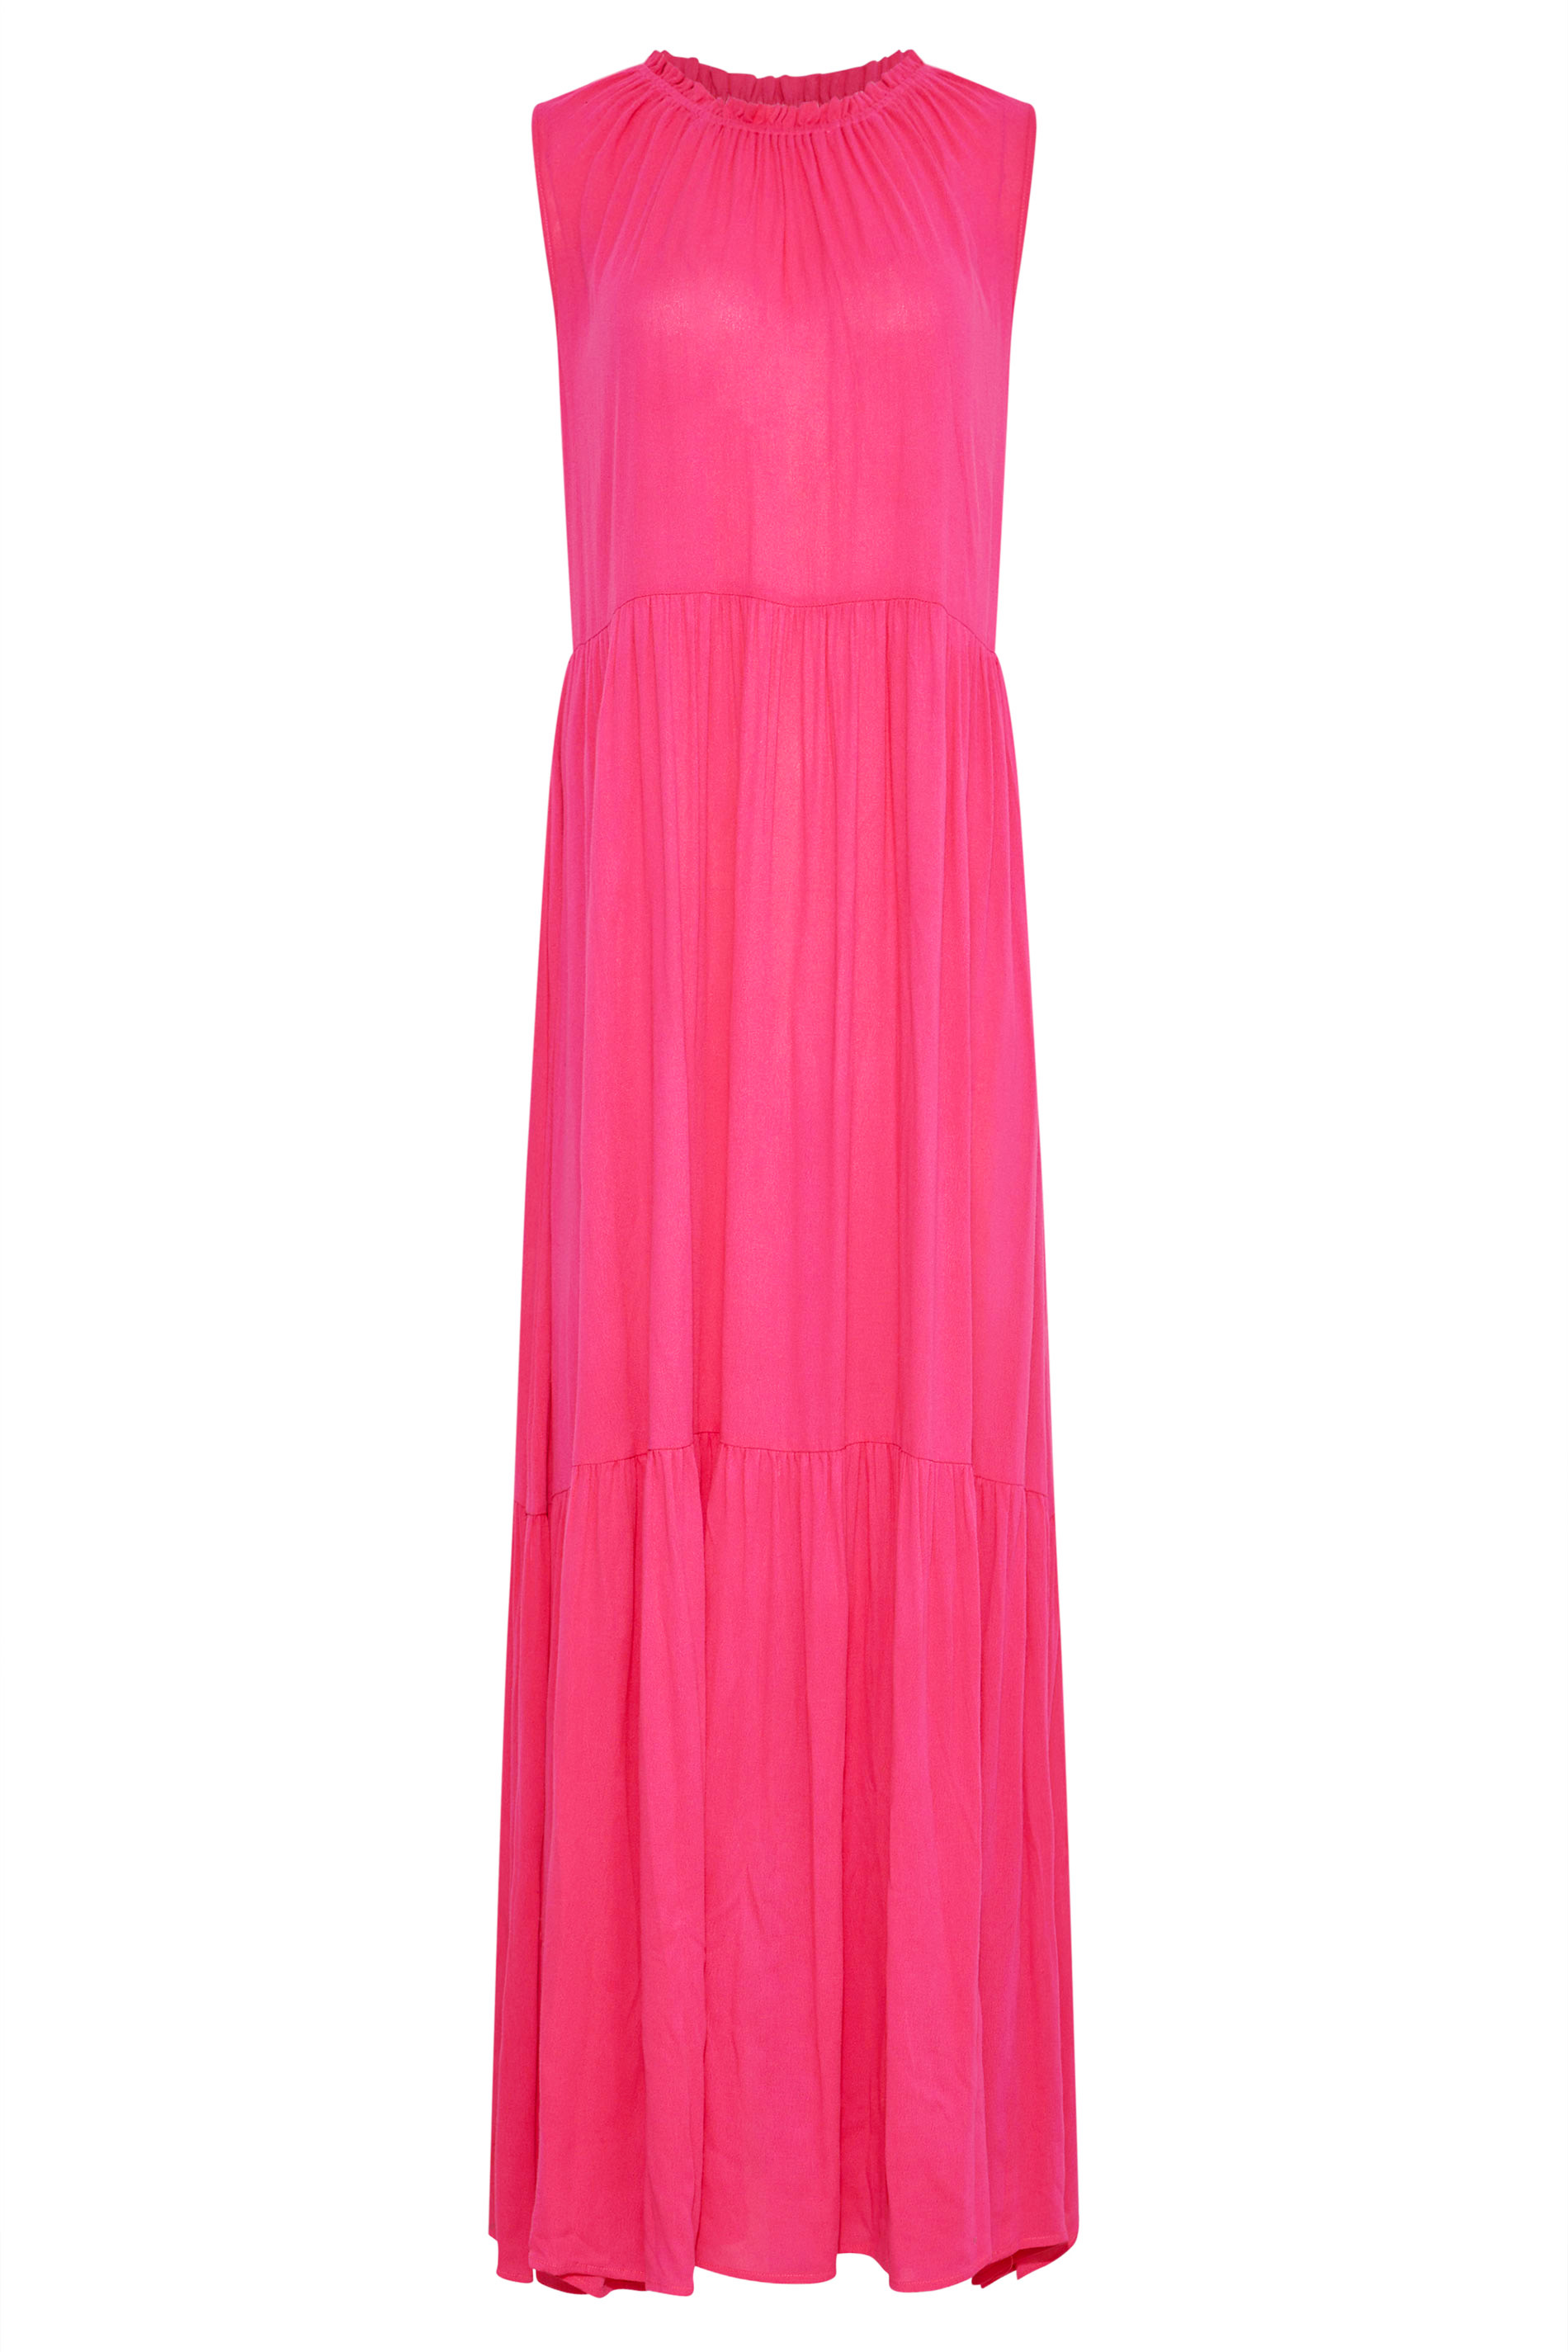 LTS Tall Women's Bright Pink Tiered Maxi Dress | Long Tall Sally